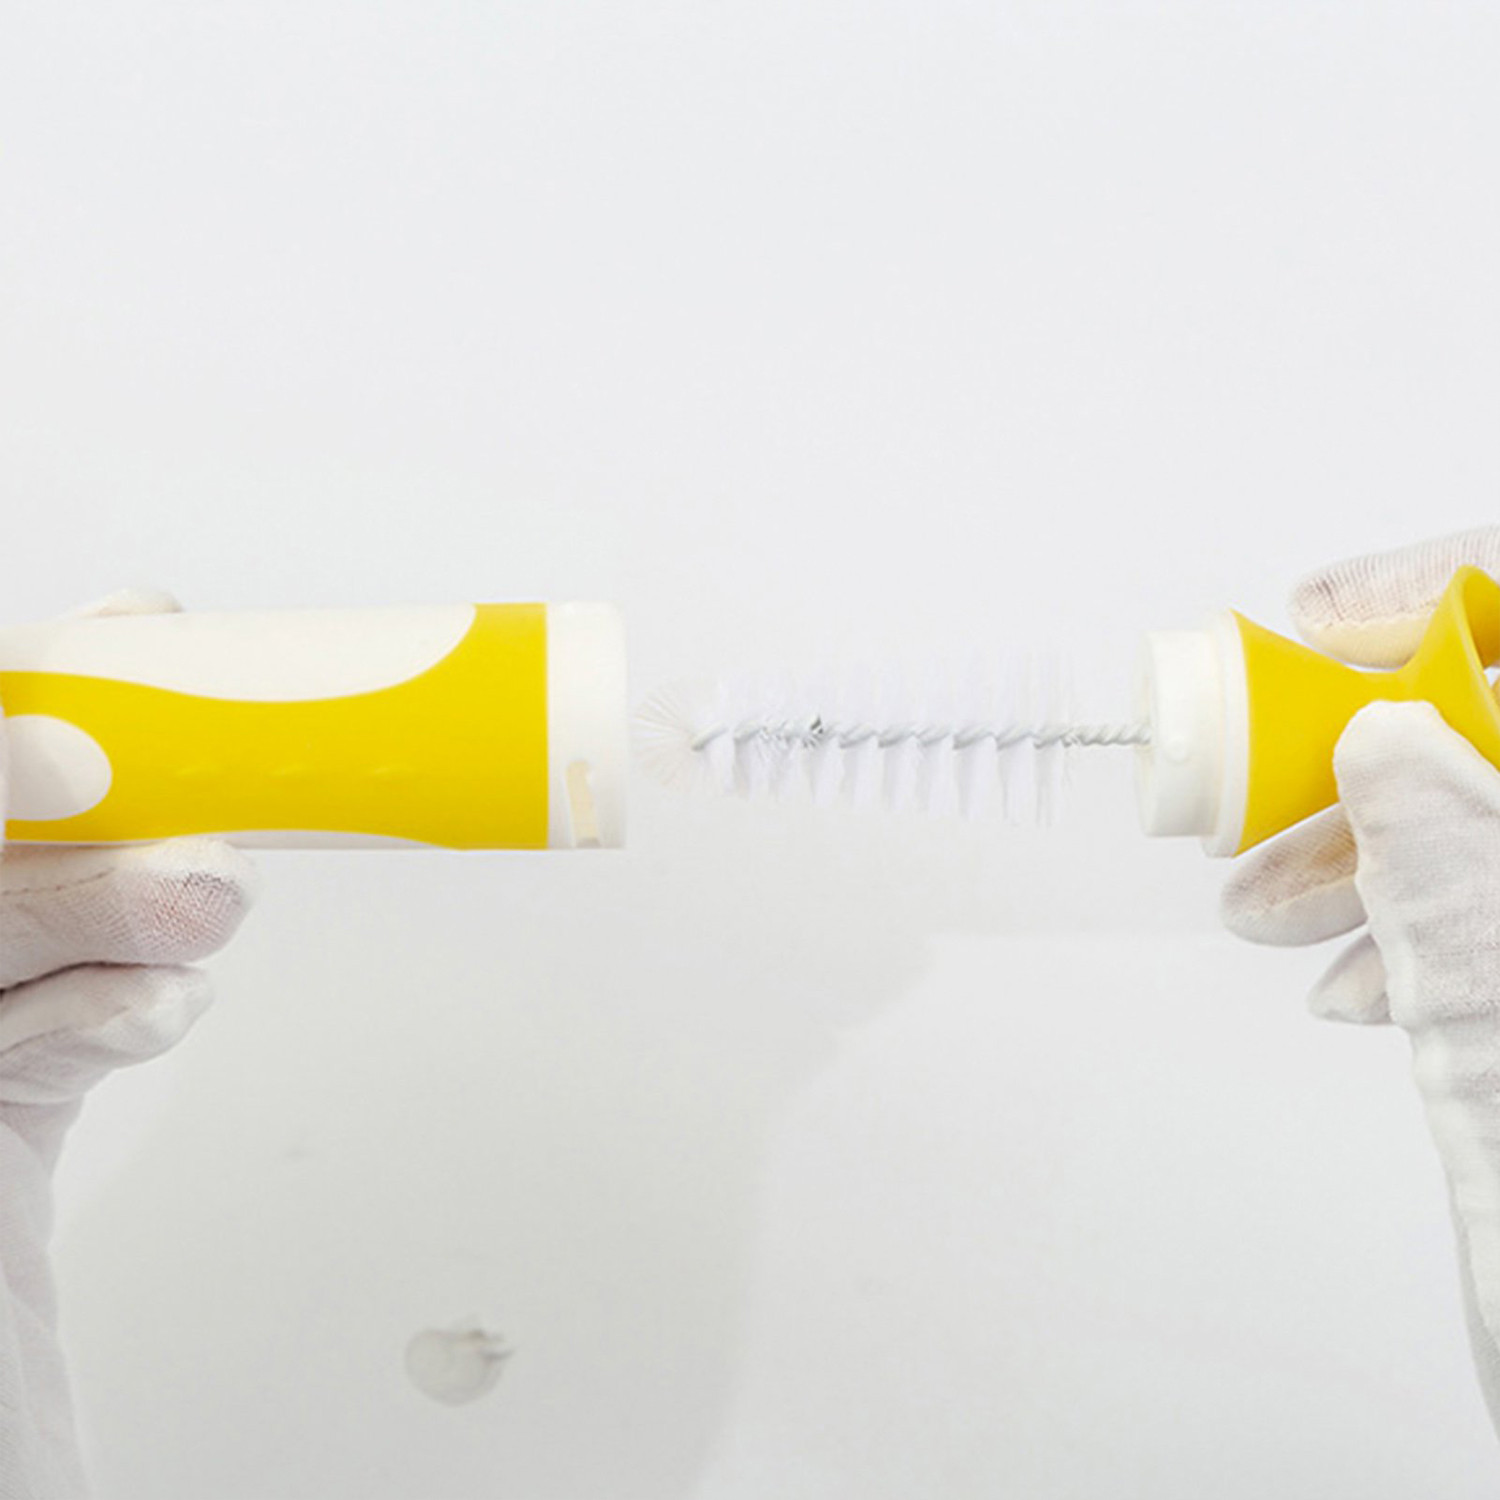 Kuber Industries Long Handle Bottle Brush|360 Degree Soft Bristle Base Detachable Baby Bottle Cleaner,10 Inch (Yellow)